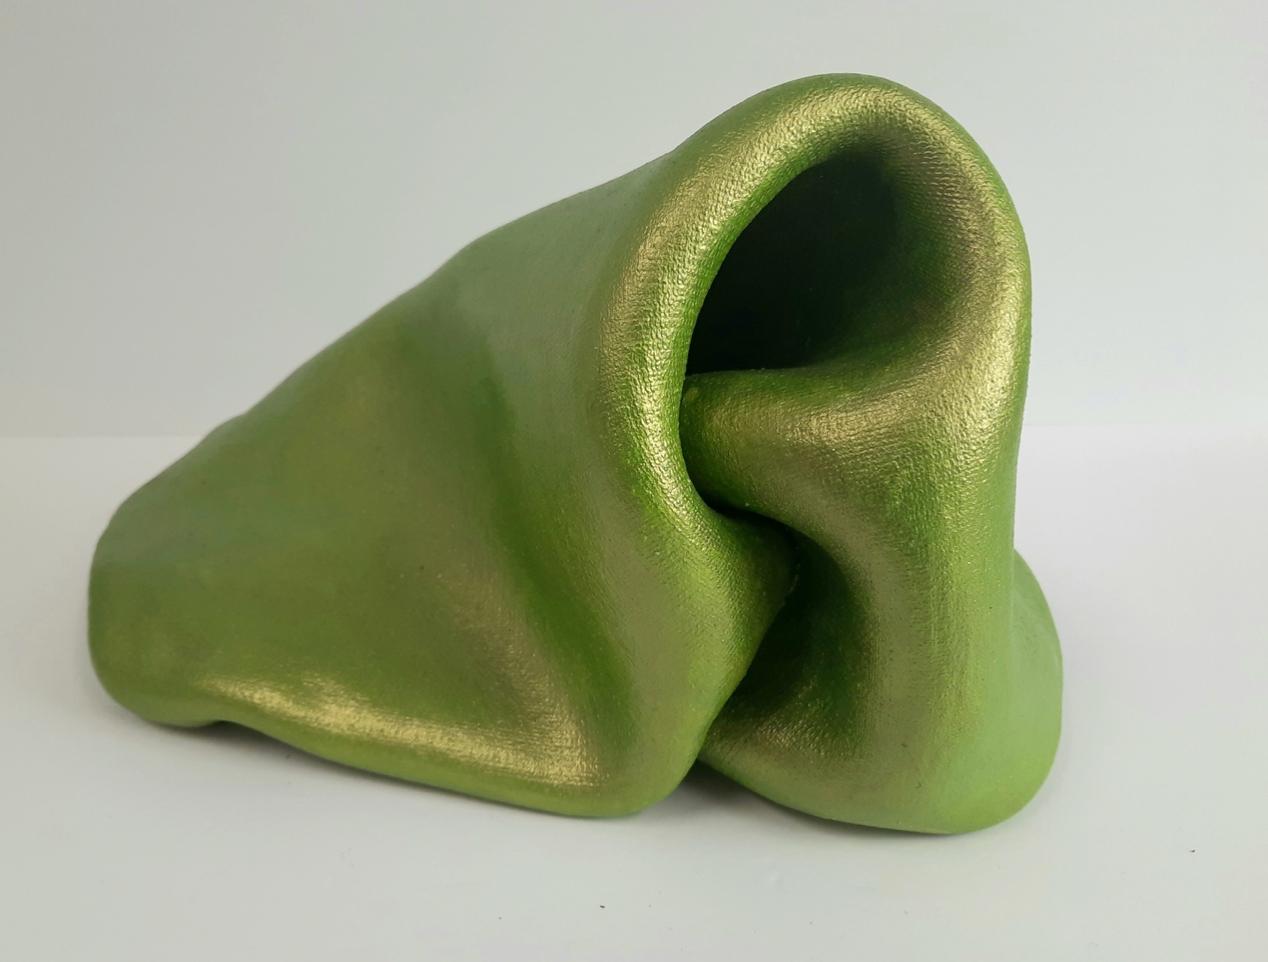 Sinuosity mini in Absinthe (pop green slick metallic smooth small sculpture 